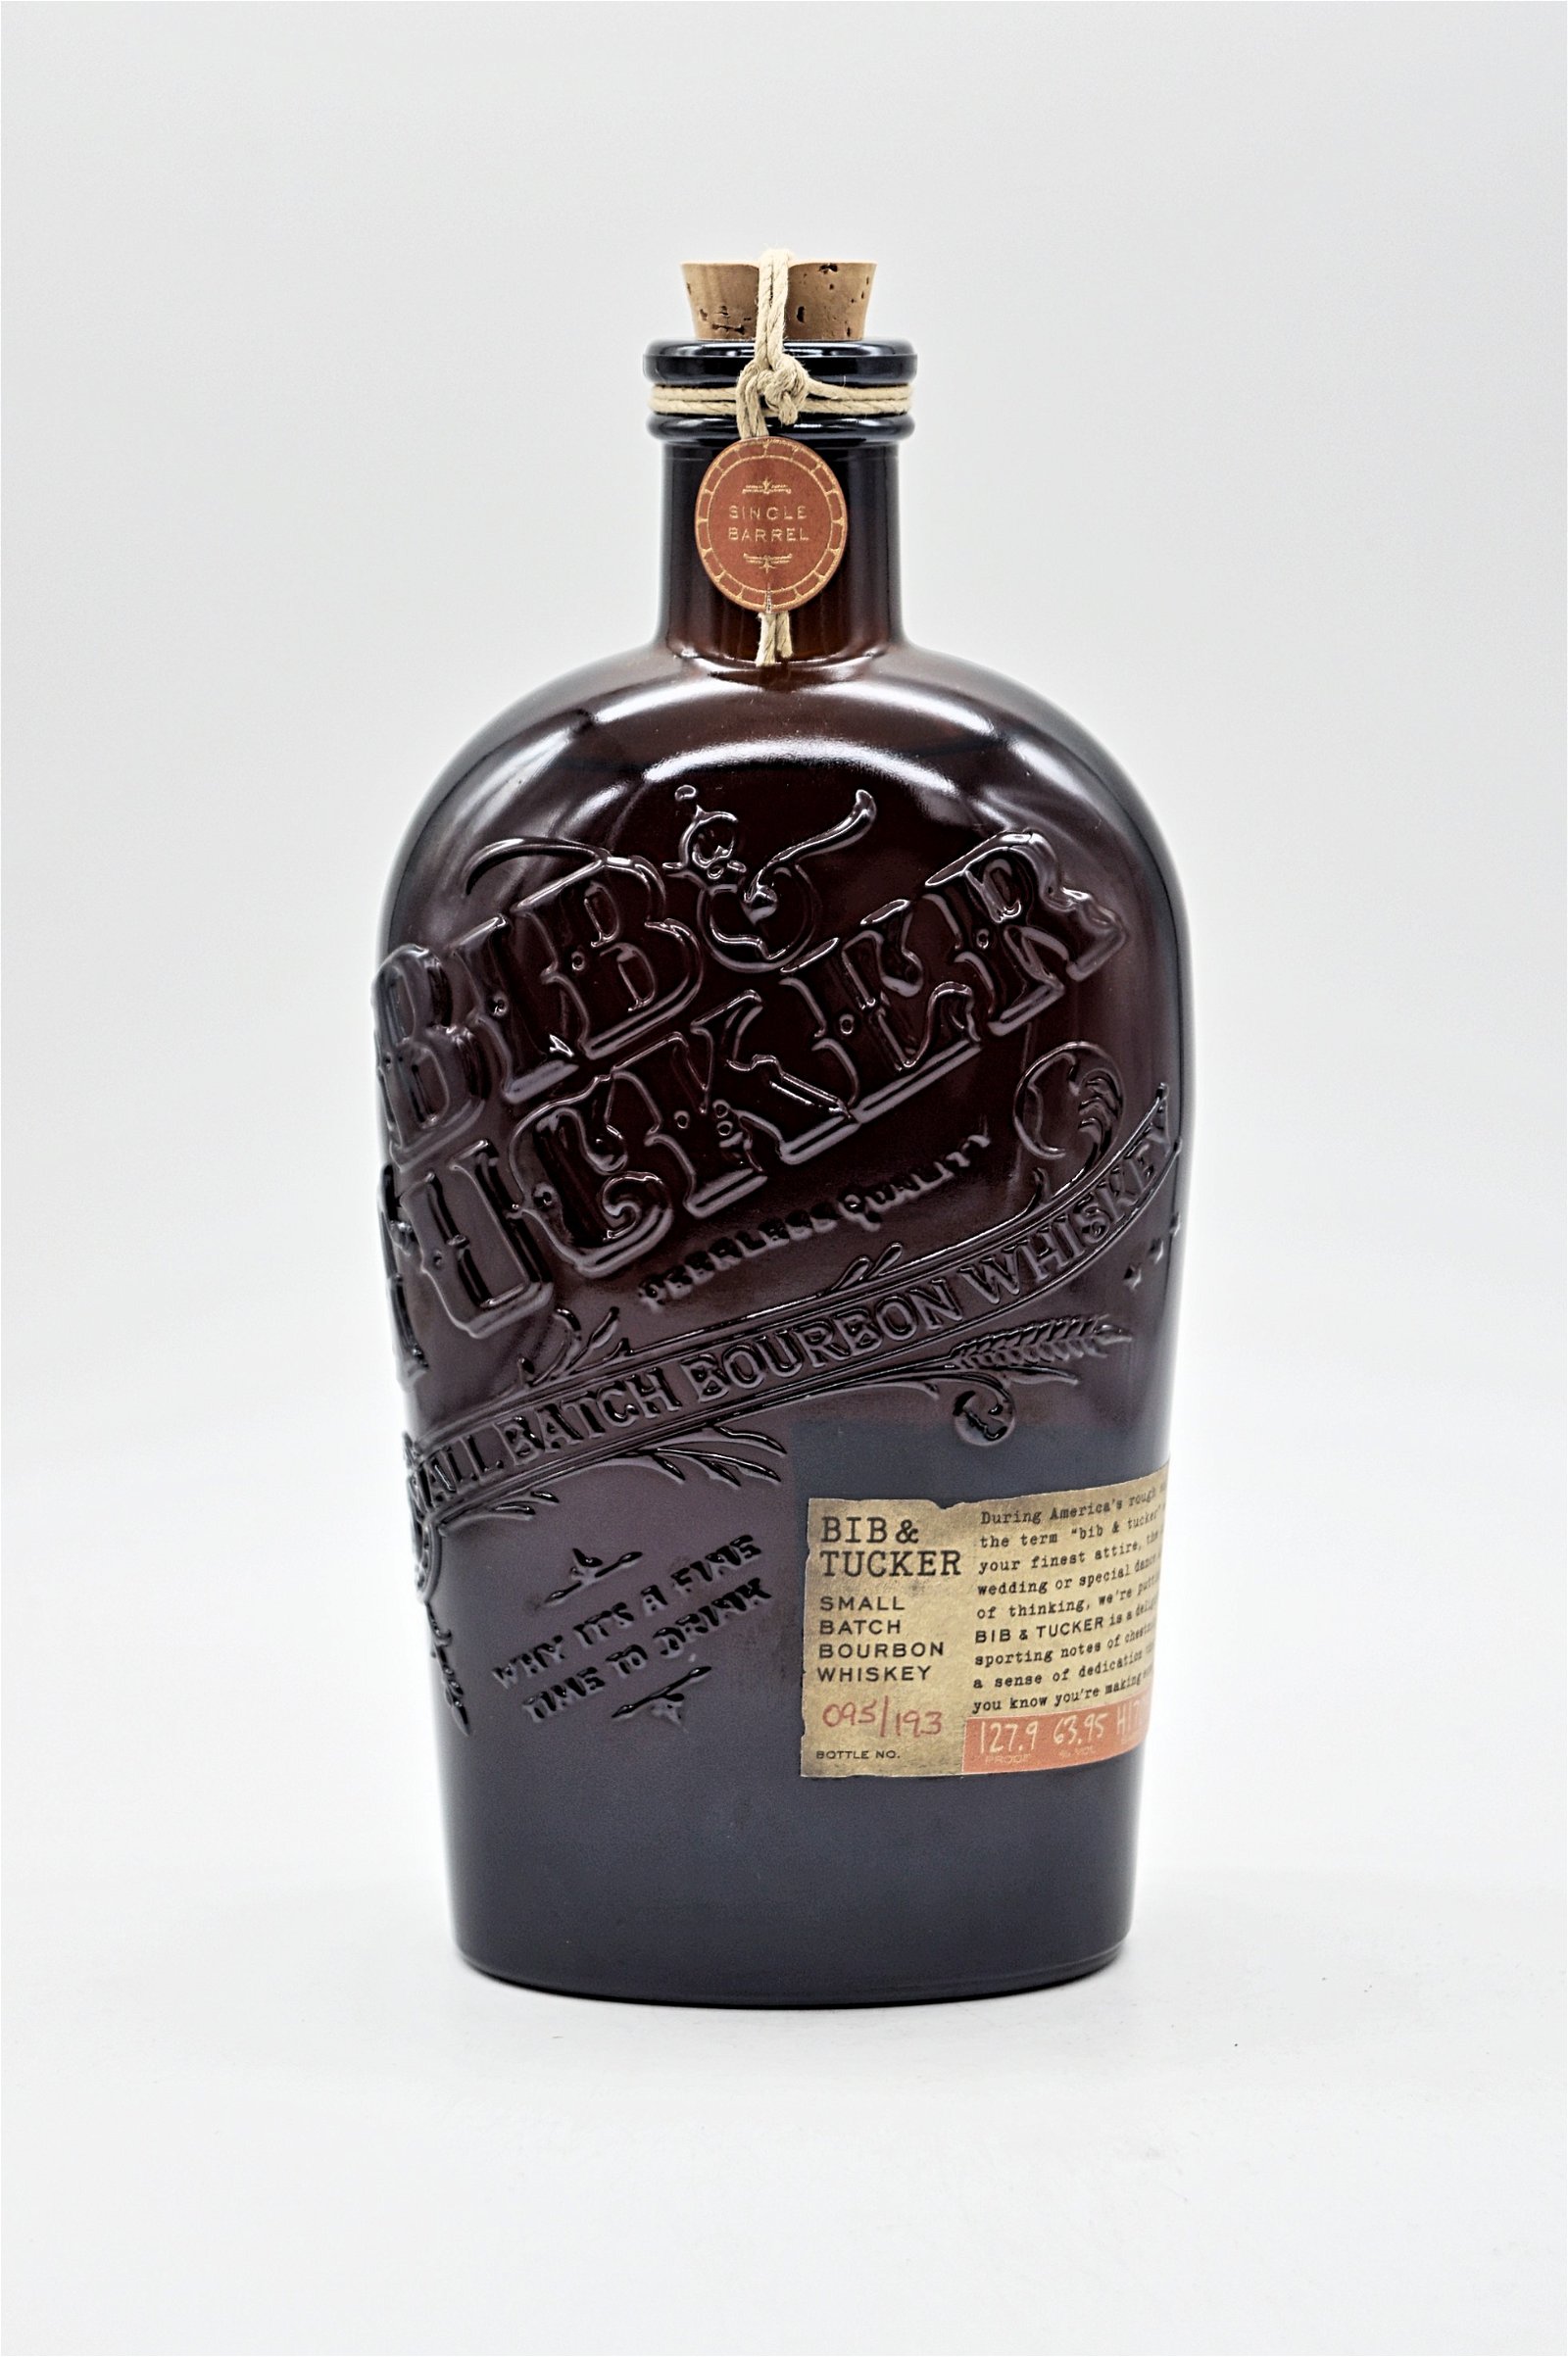 Bib & Tucker 7 Jahre Small Batch Bourbon Whiskey 127,9 Proof